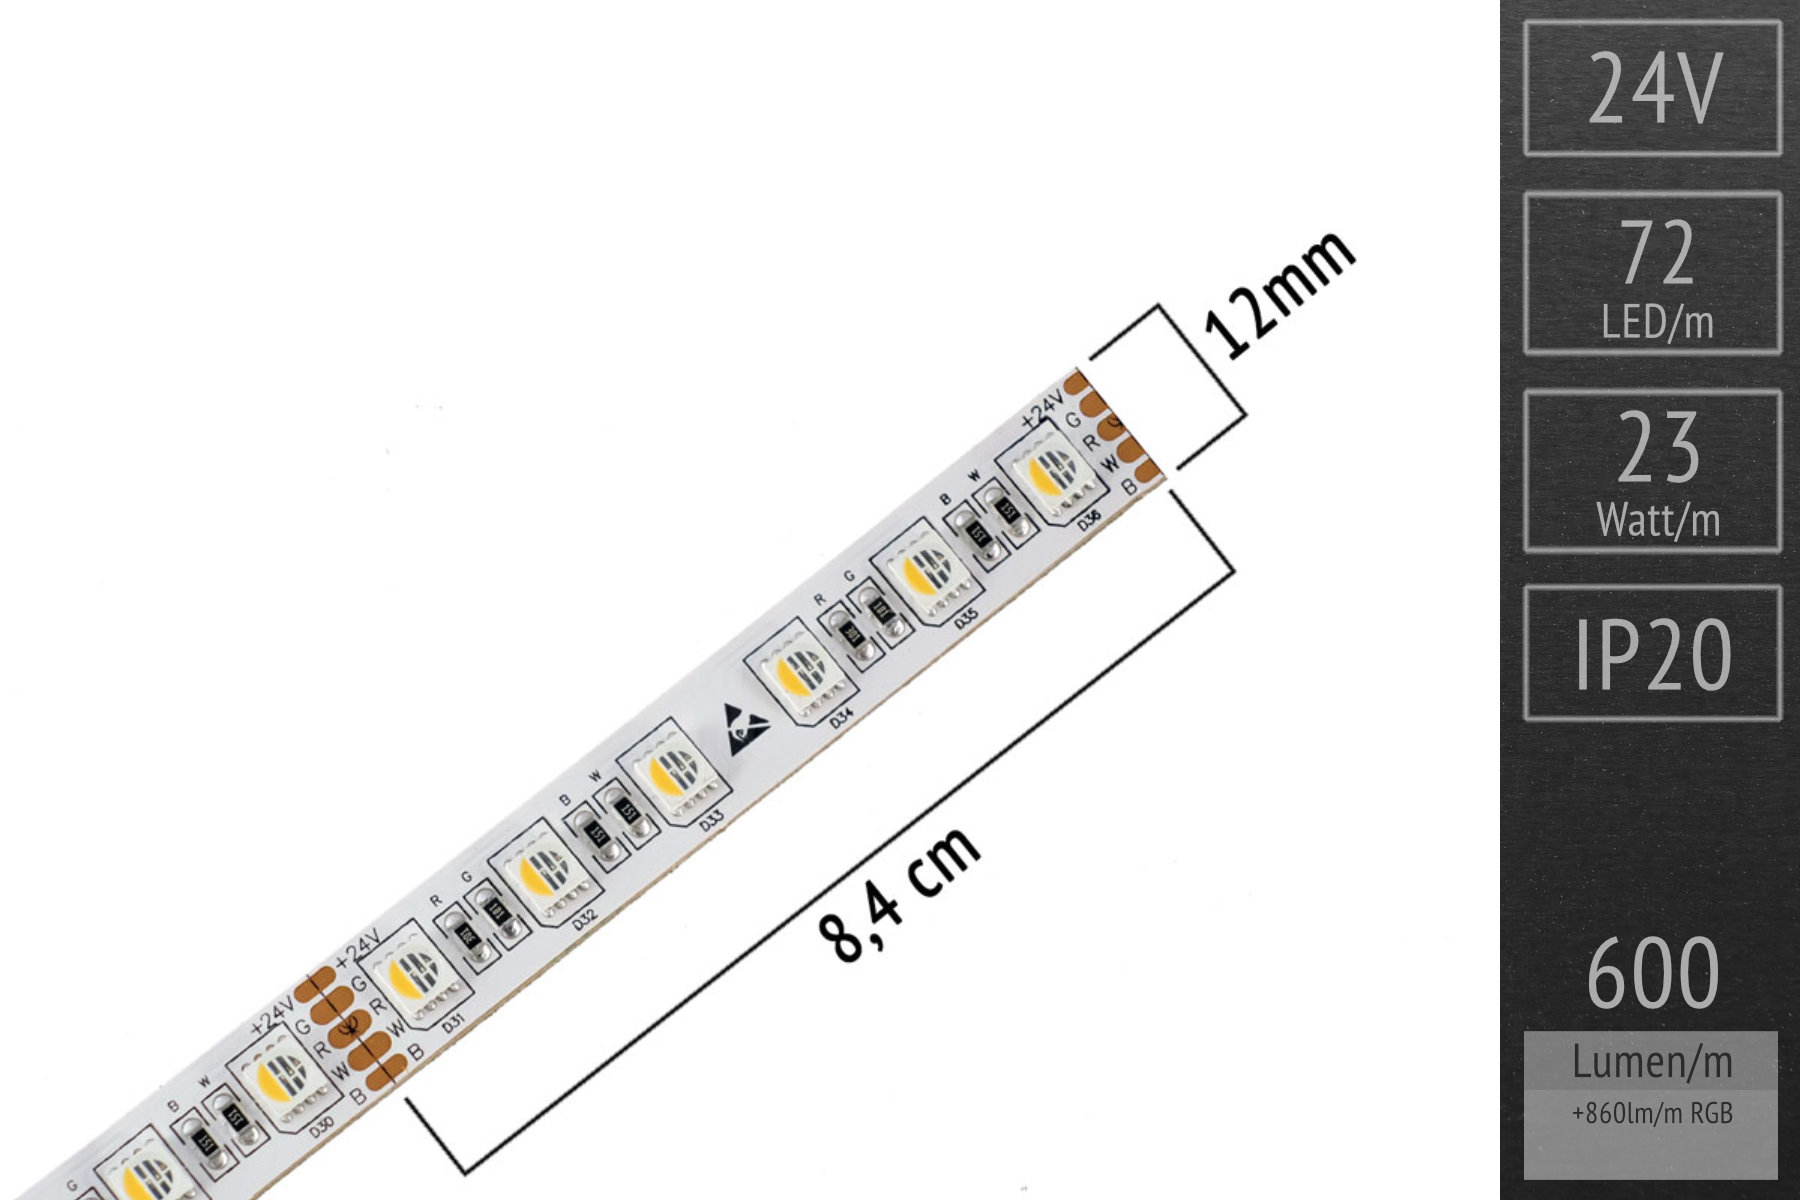 ZigBee-RGBW-LED-Set: 5 Meter